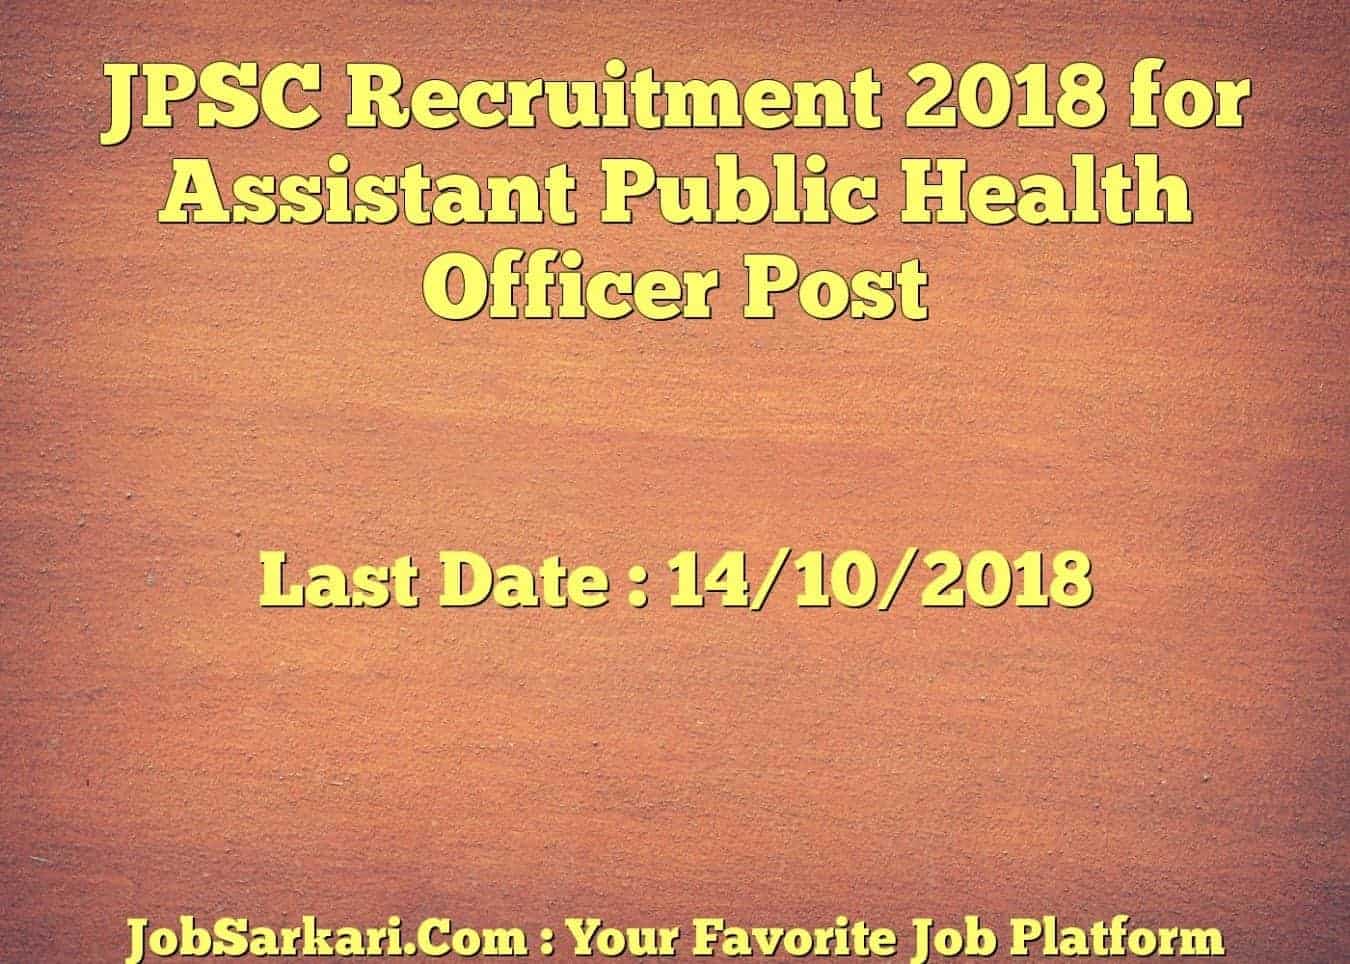 JPSC Recruitment 2018 for Assistant Public Health Officer Post